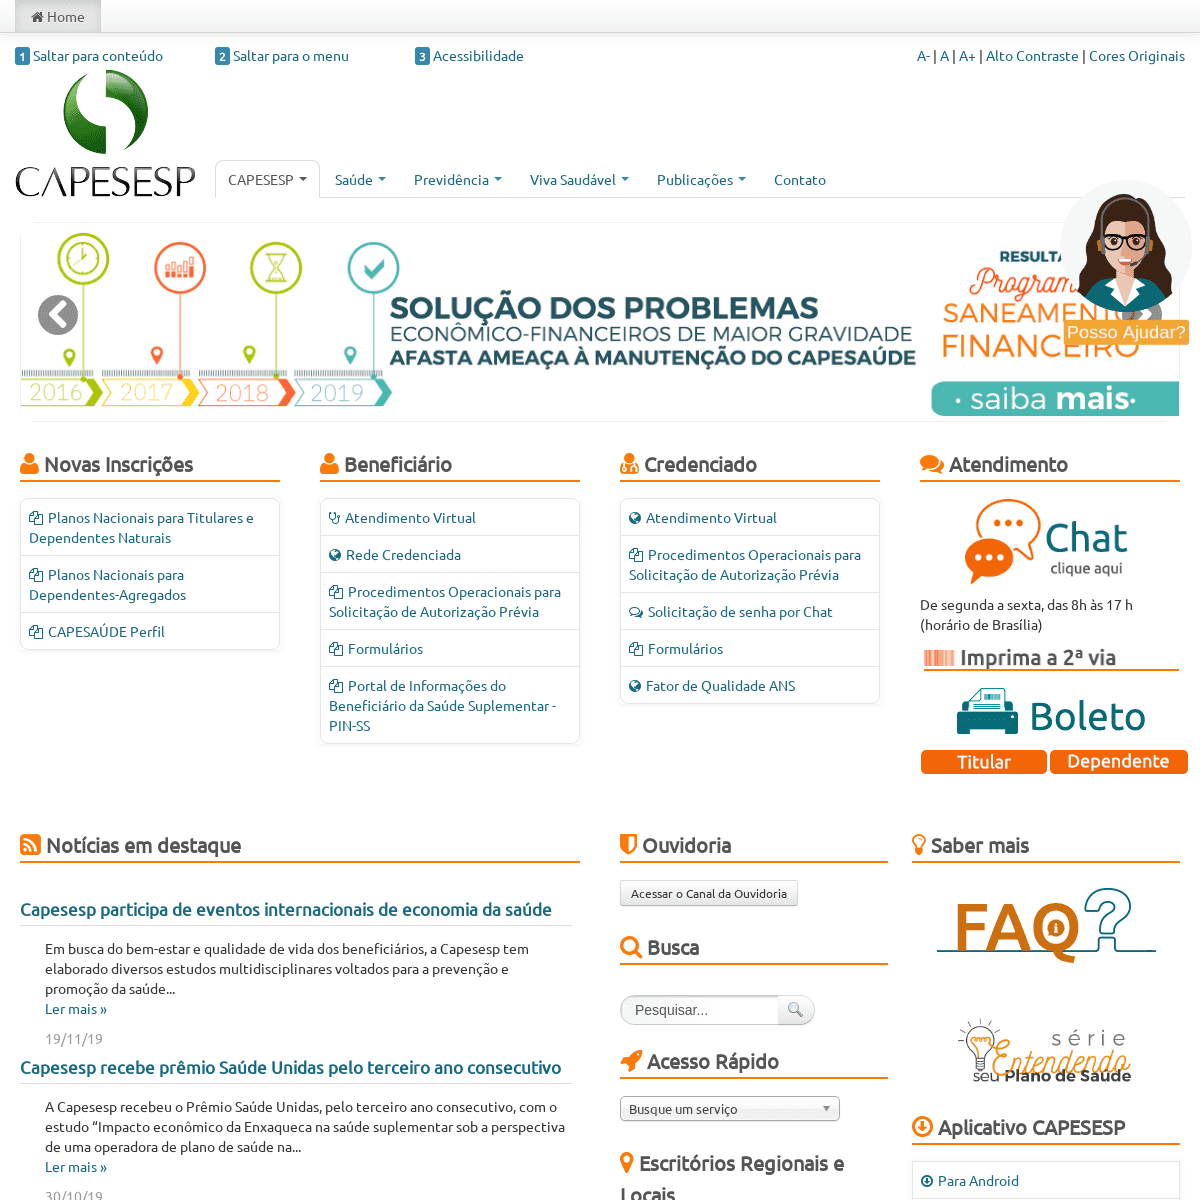 A complete backup of capesesp.com.br